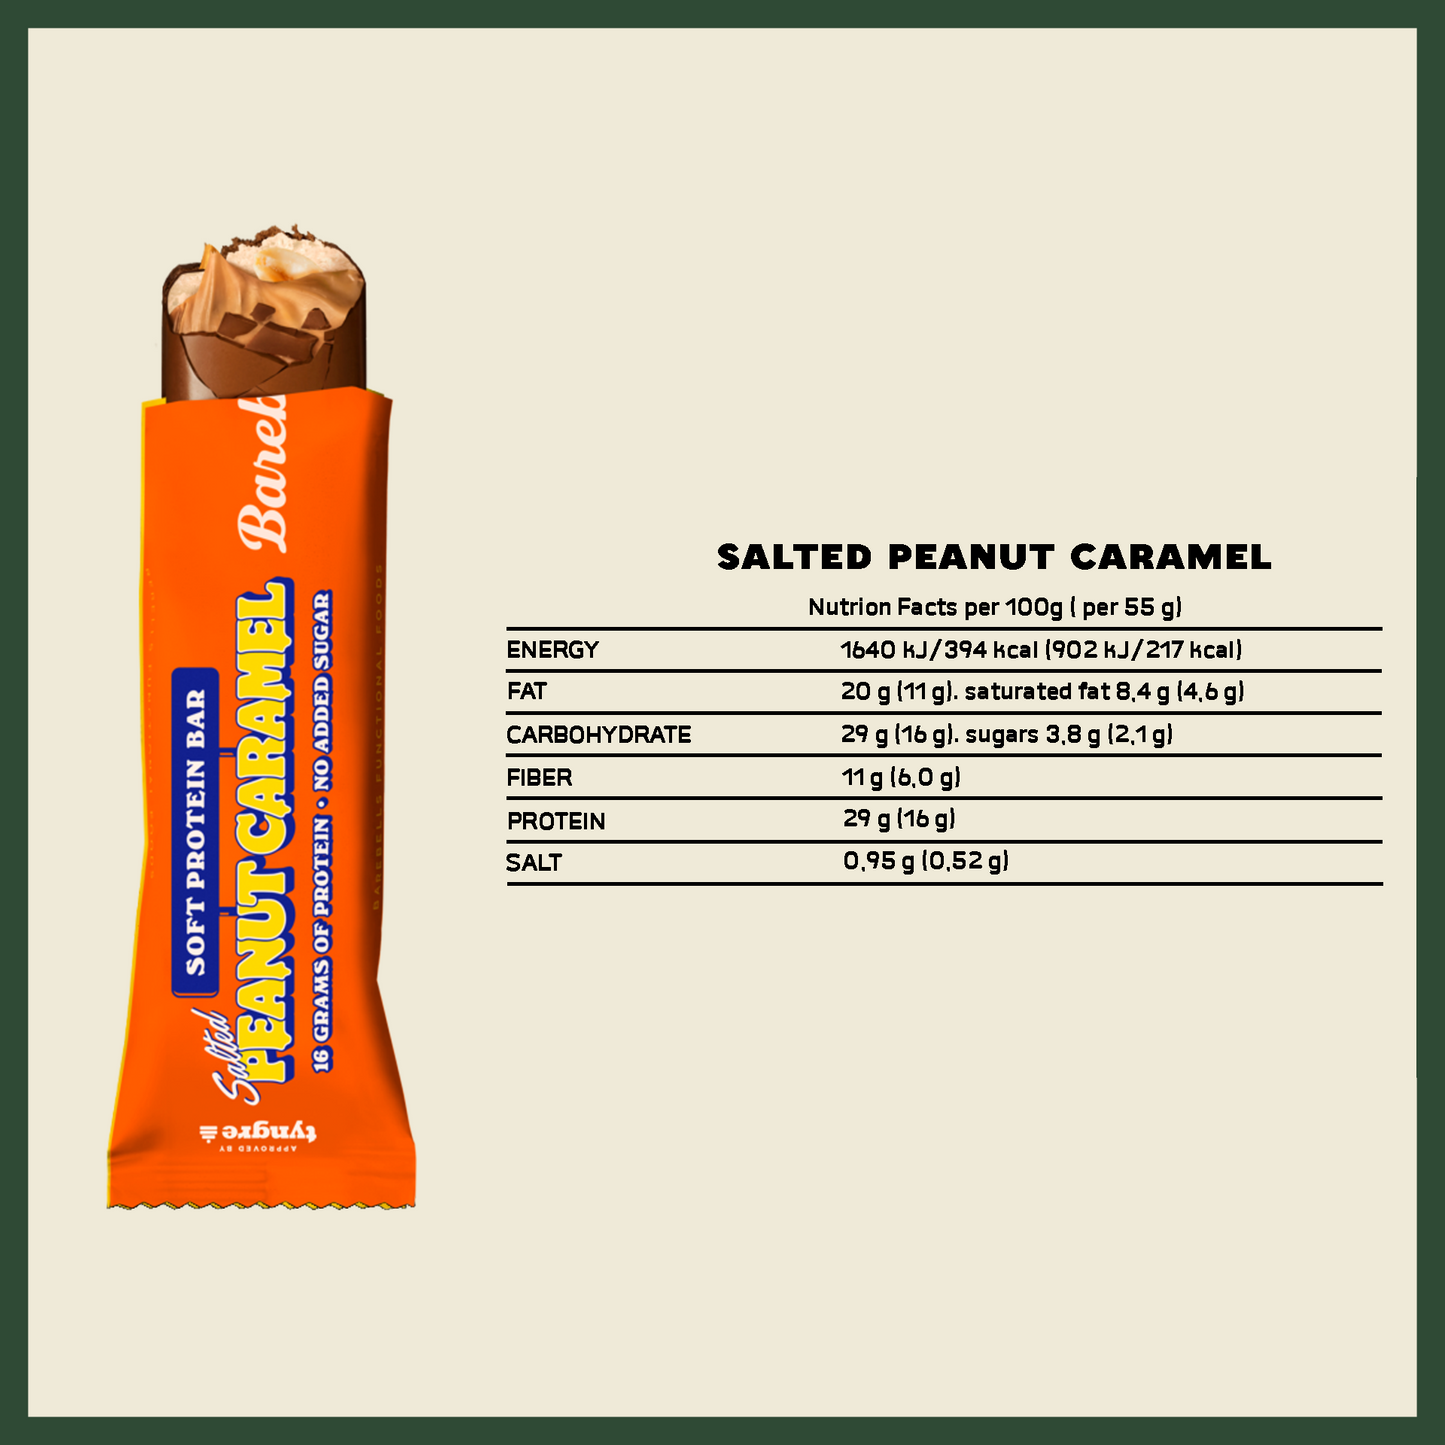 Barebells Soft Protein Bar ( NEW )- Salted Peanut Caramel (1 Box -12 bars)